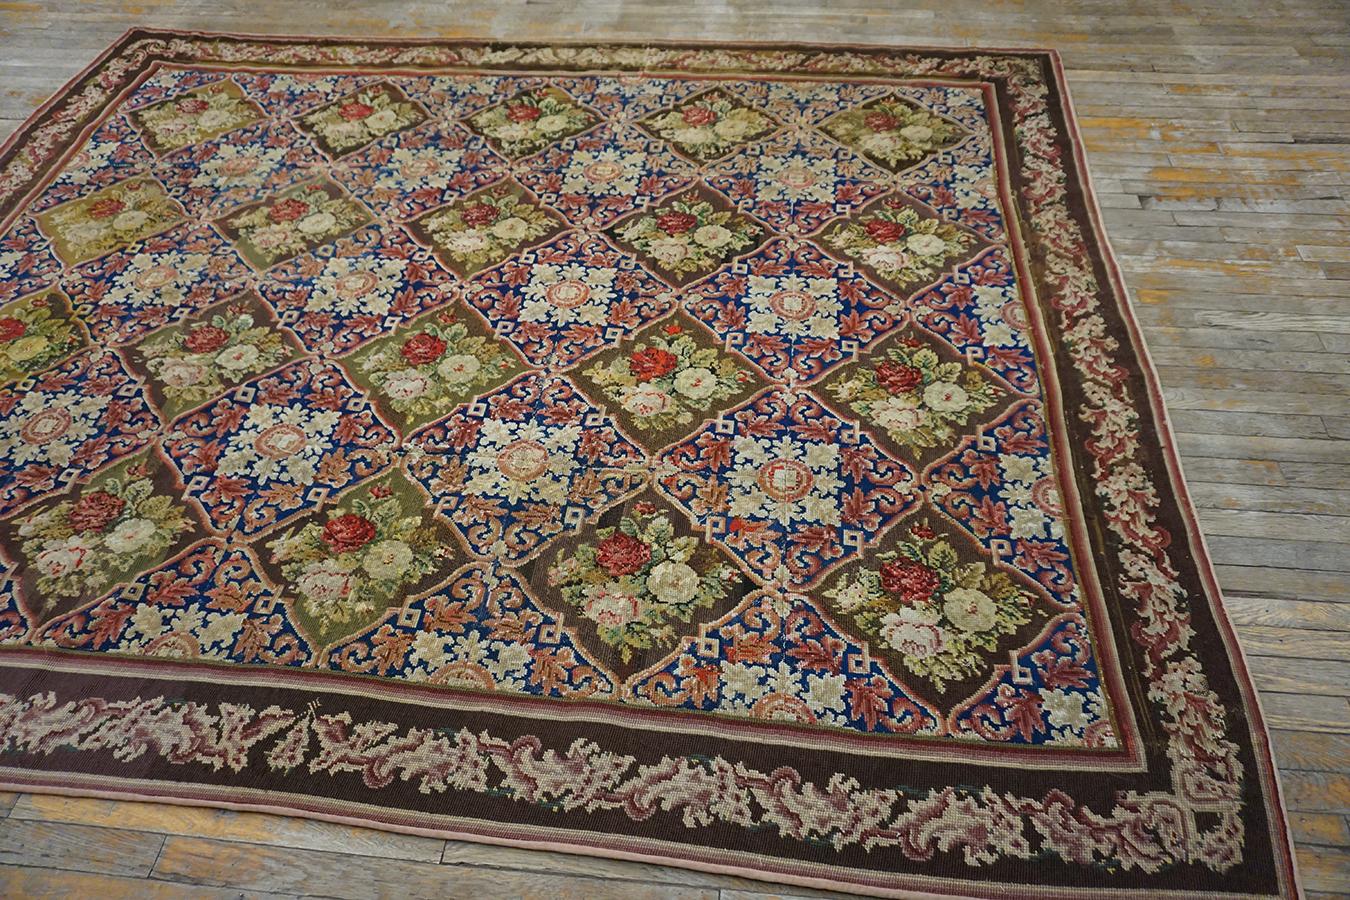 19th Century English Needlepoint Carpet ( 7'6